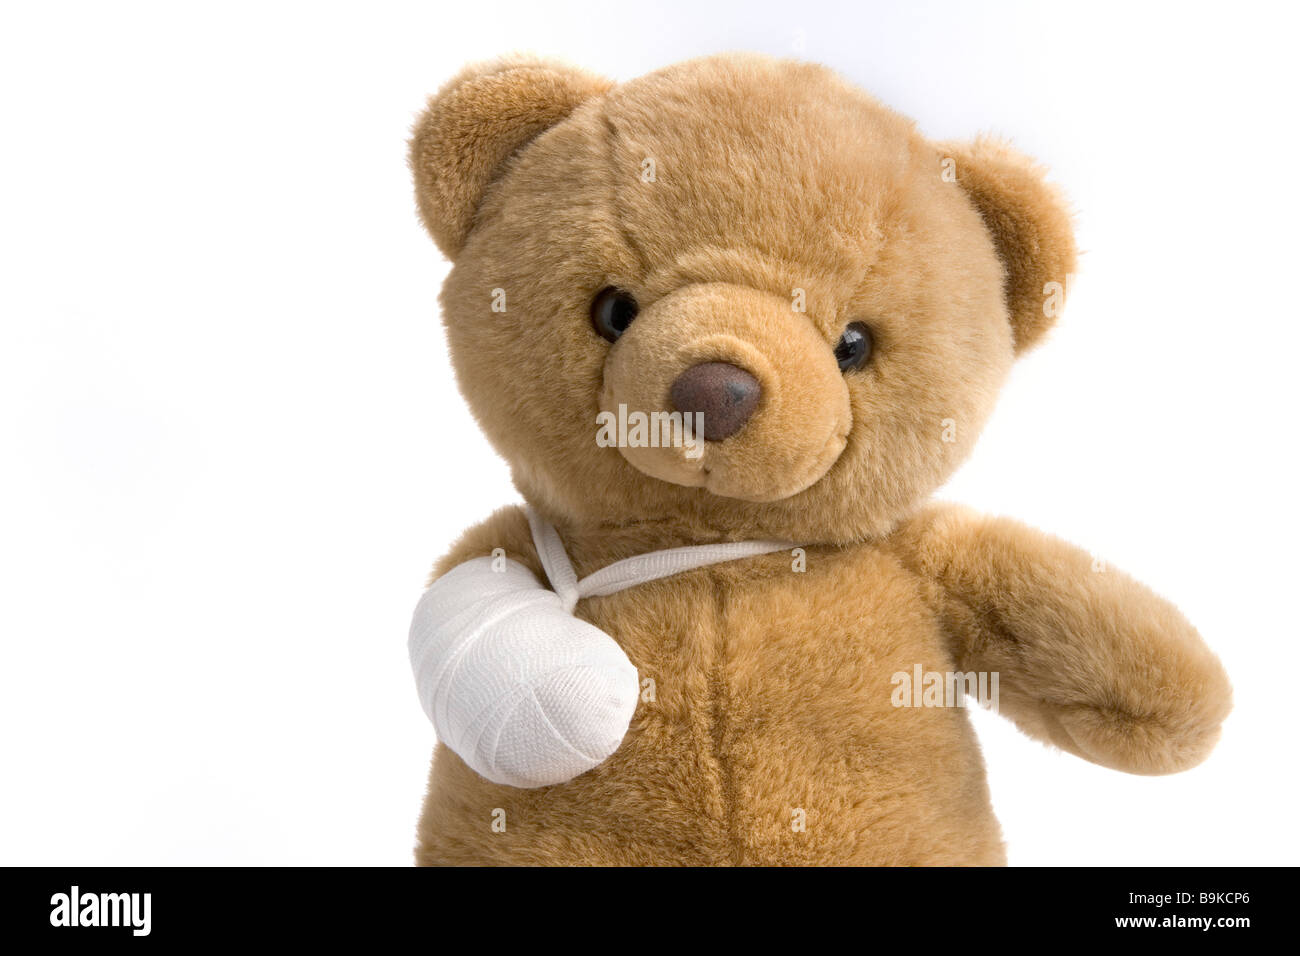 Toy bear with a broken leg Stock Photo